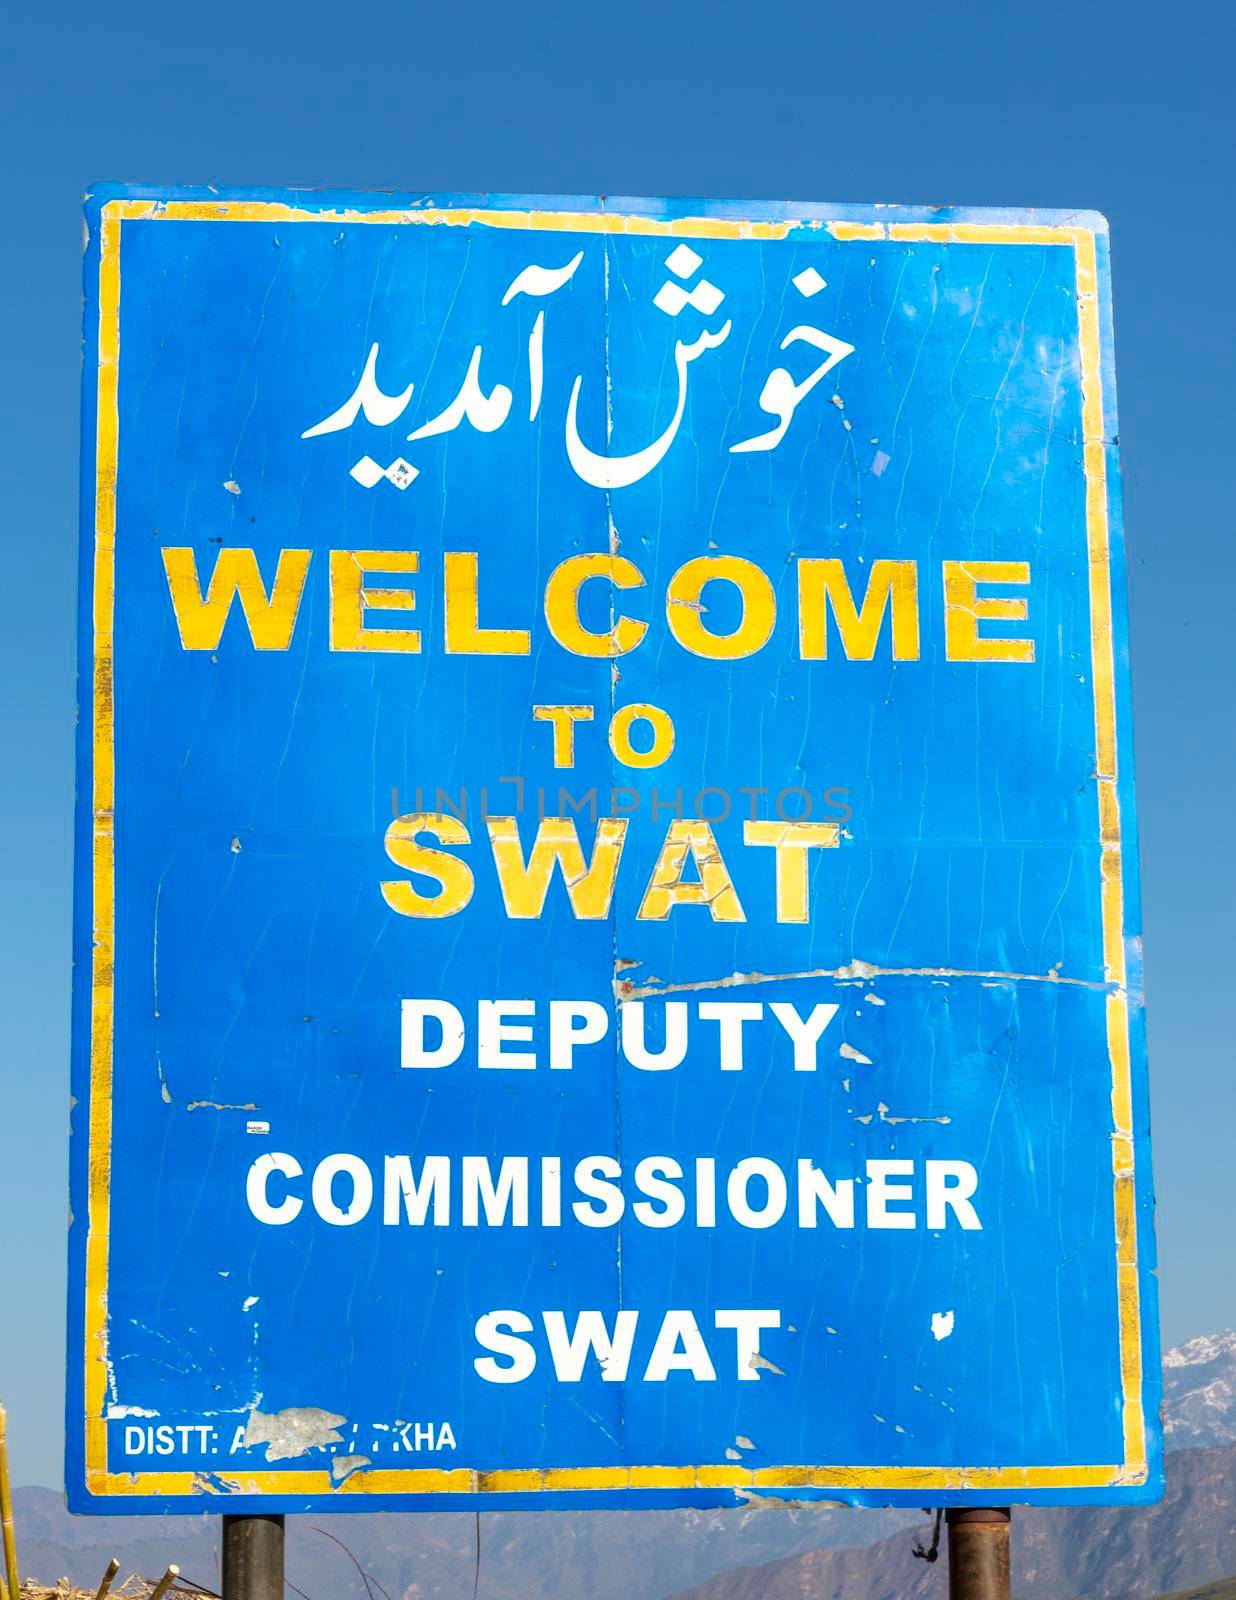 Swat, KPK, Pakistan - March, 8, 2022: Welcome to Swat sign board by Deputy commissioner Swat valley also written in urdu translation of welcome